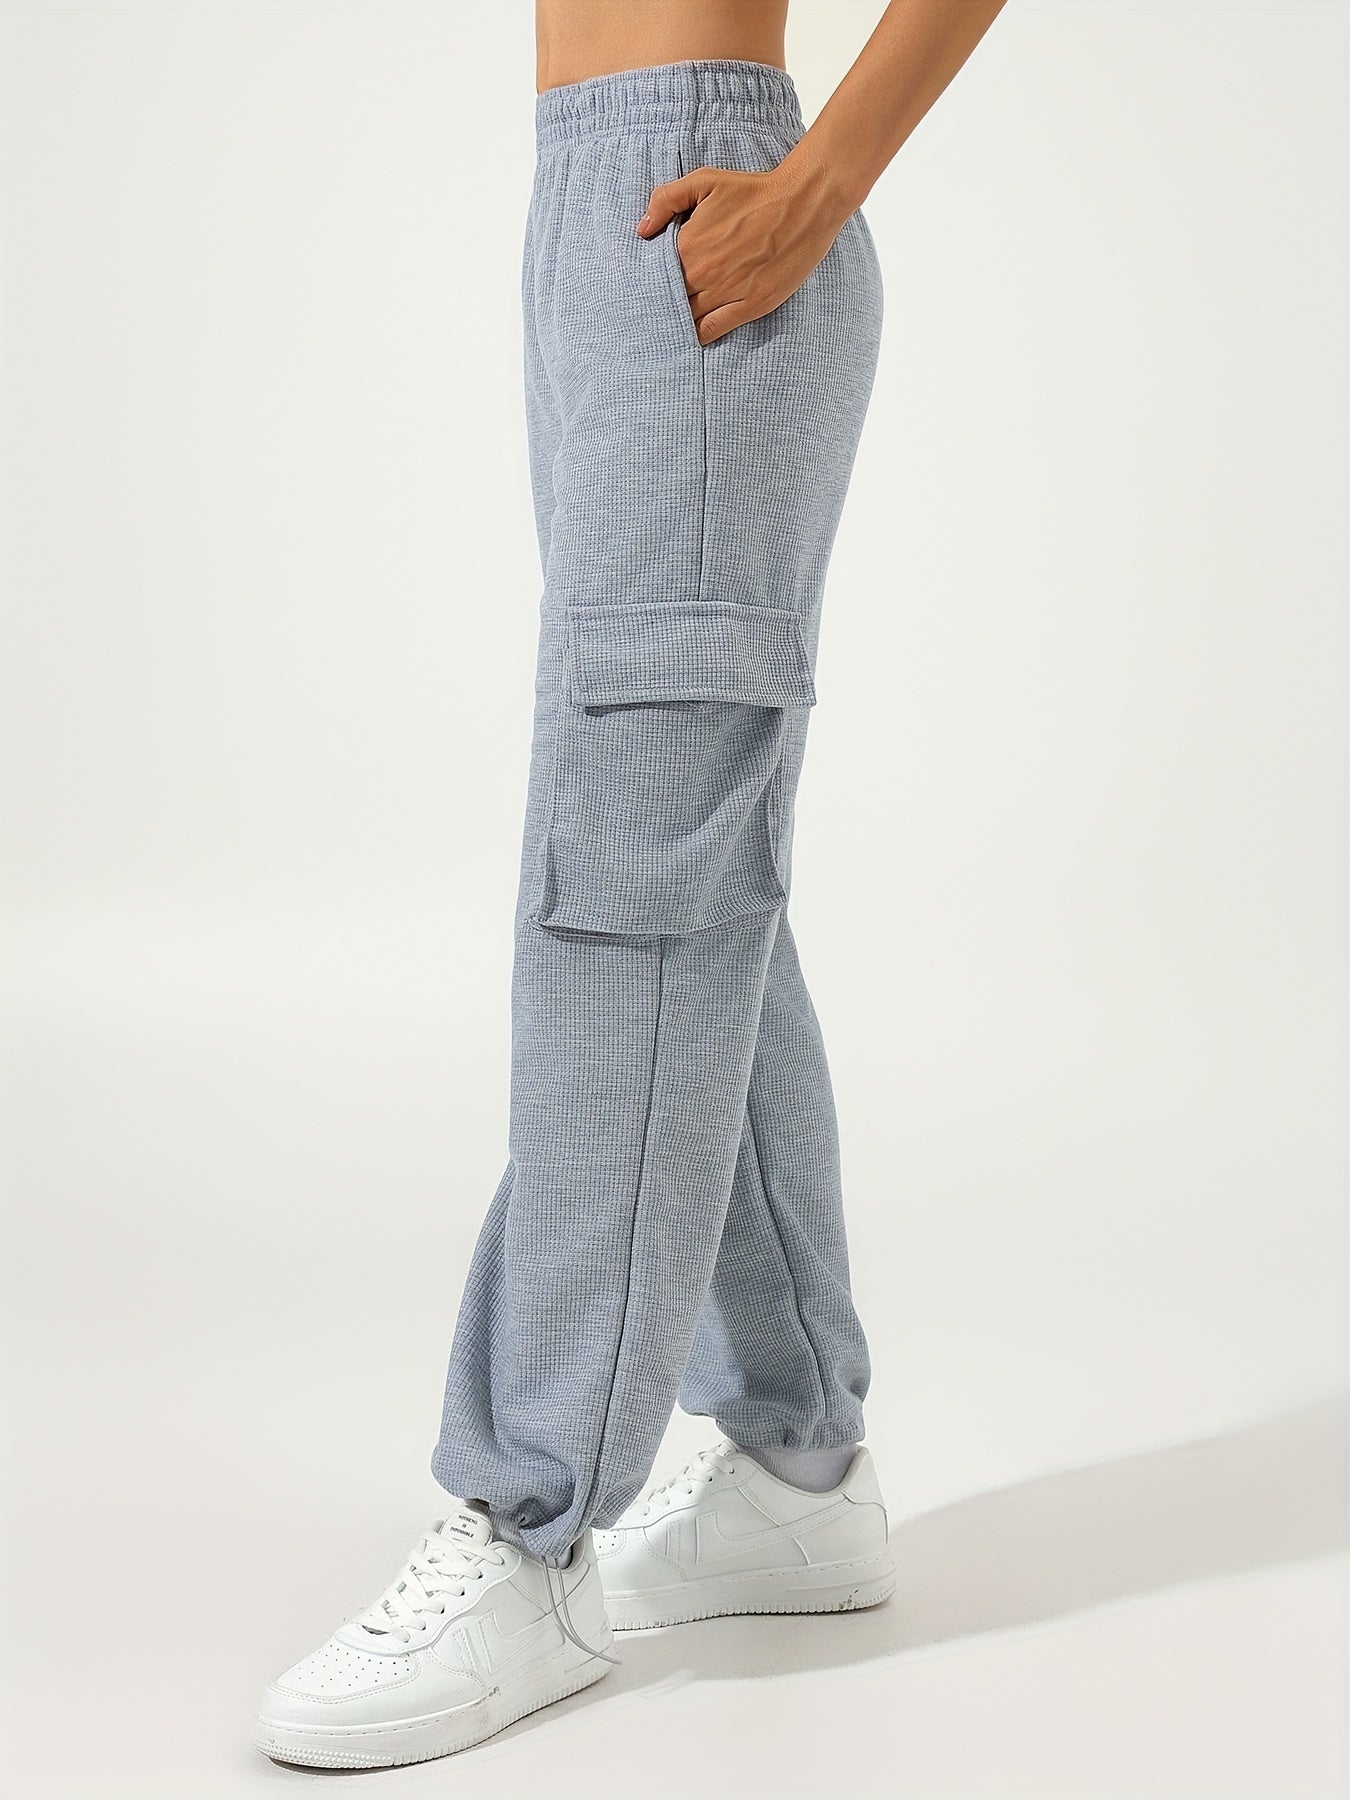 Antmvs Waffle Casual Sports Elastic Waist Sweatpants, Multi-pocket High Waist Solid Color Joggers Pants, Women's Athleisure